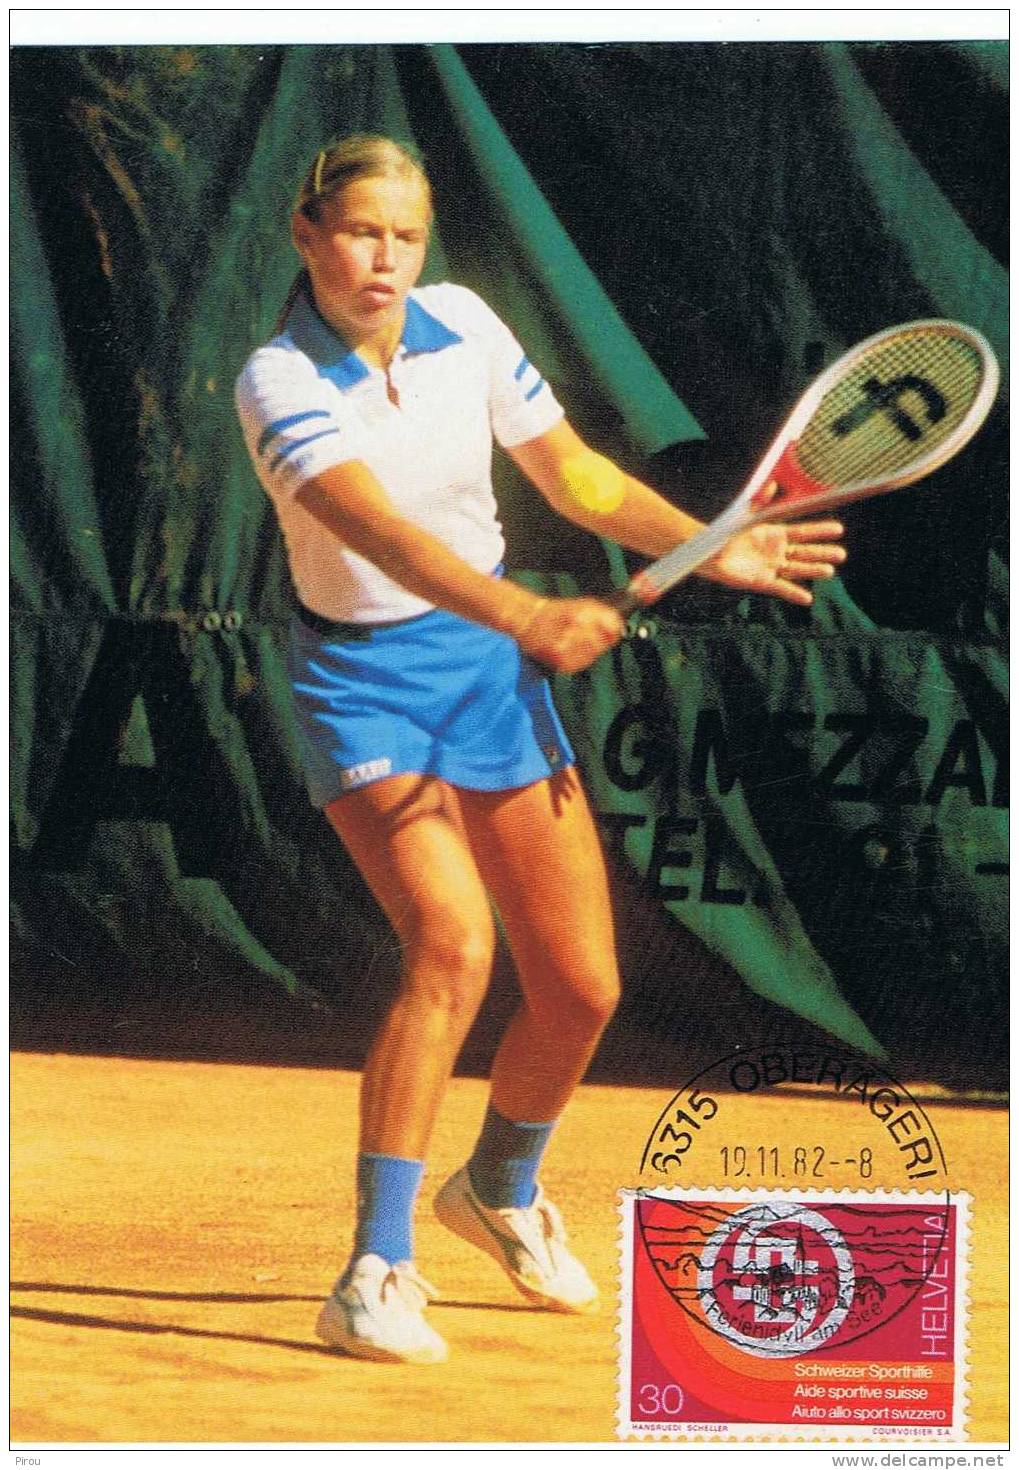 SUISSE : TENNIS ISABELLE VILLIGER / AIDE SPORTIVE SUISSE 1982 - Tennis